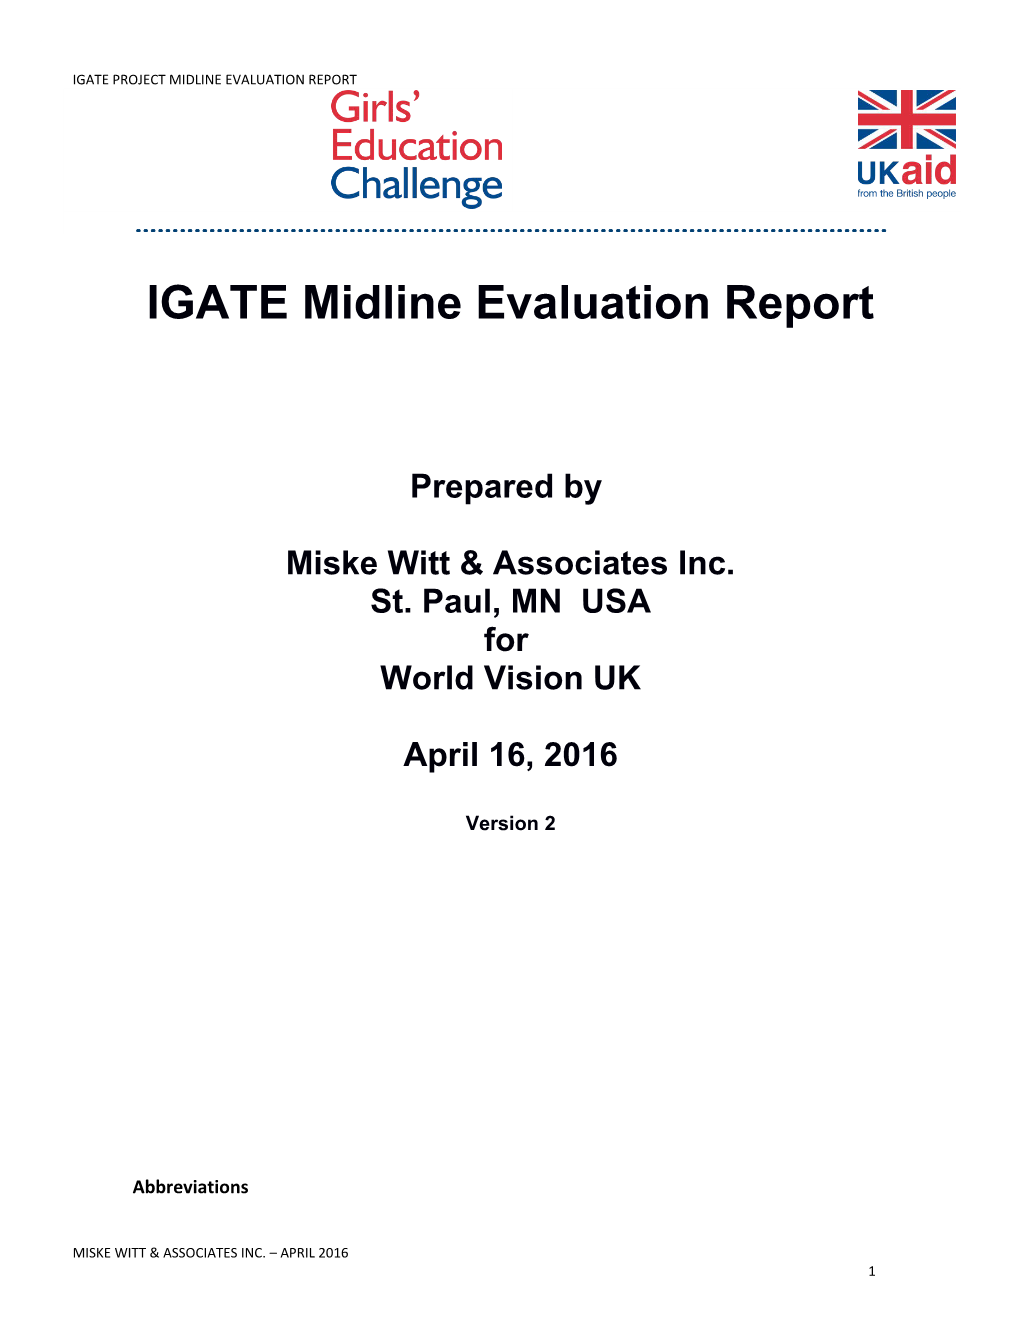 IGATE Midline Evaluation Report